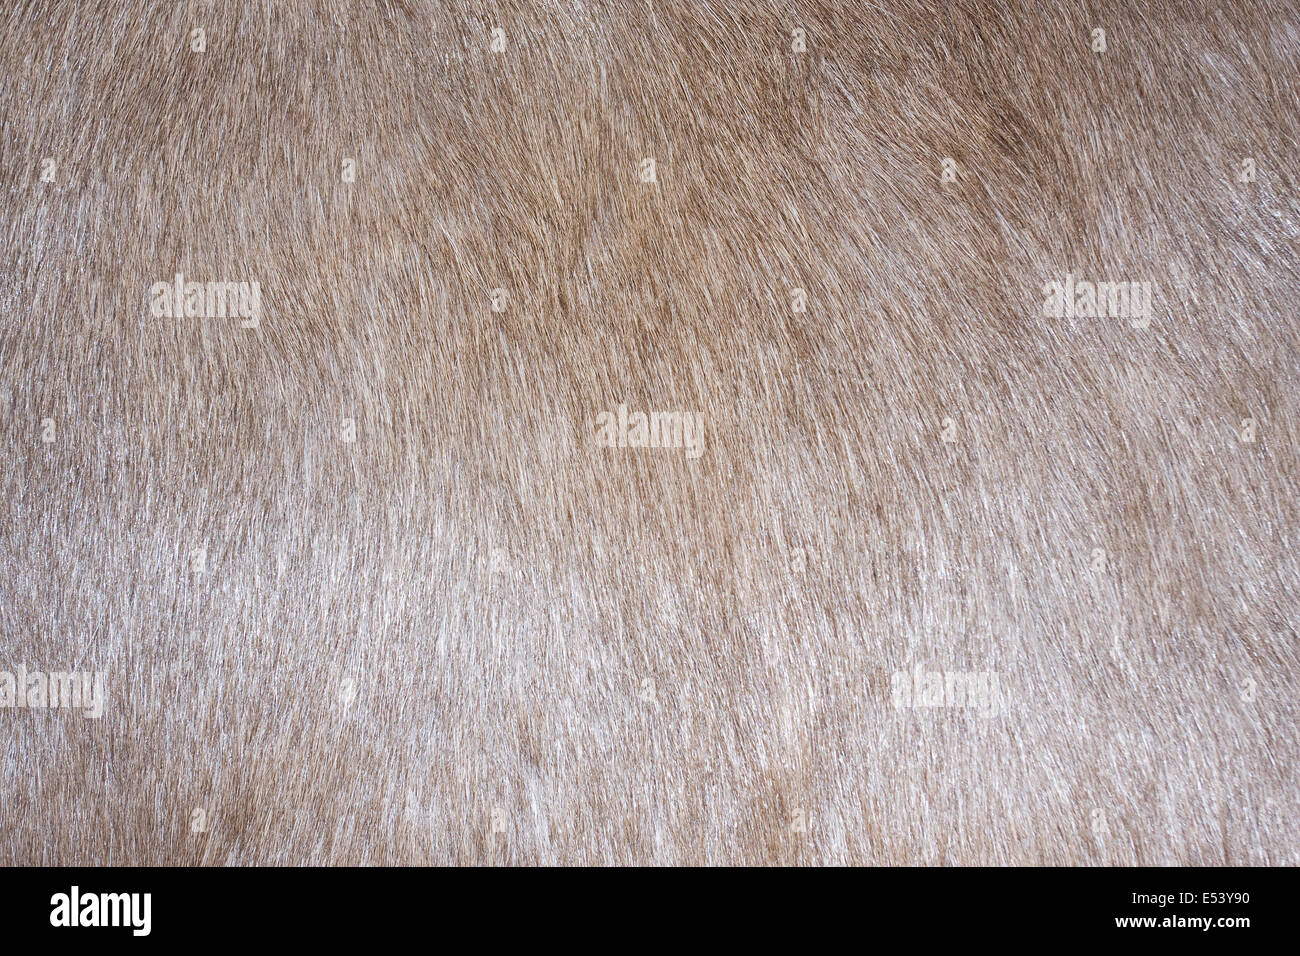 Fur texture background Stock Photo